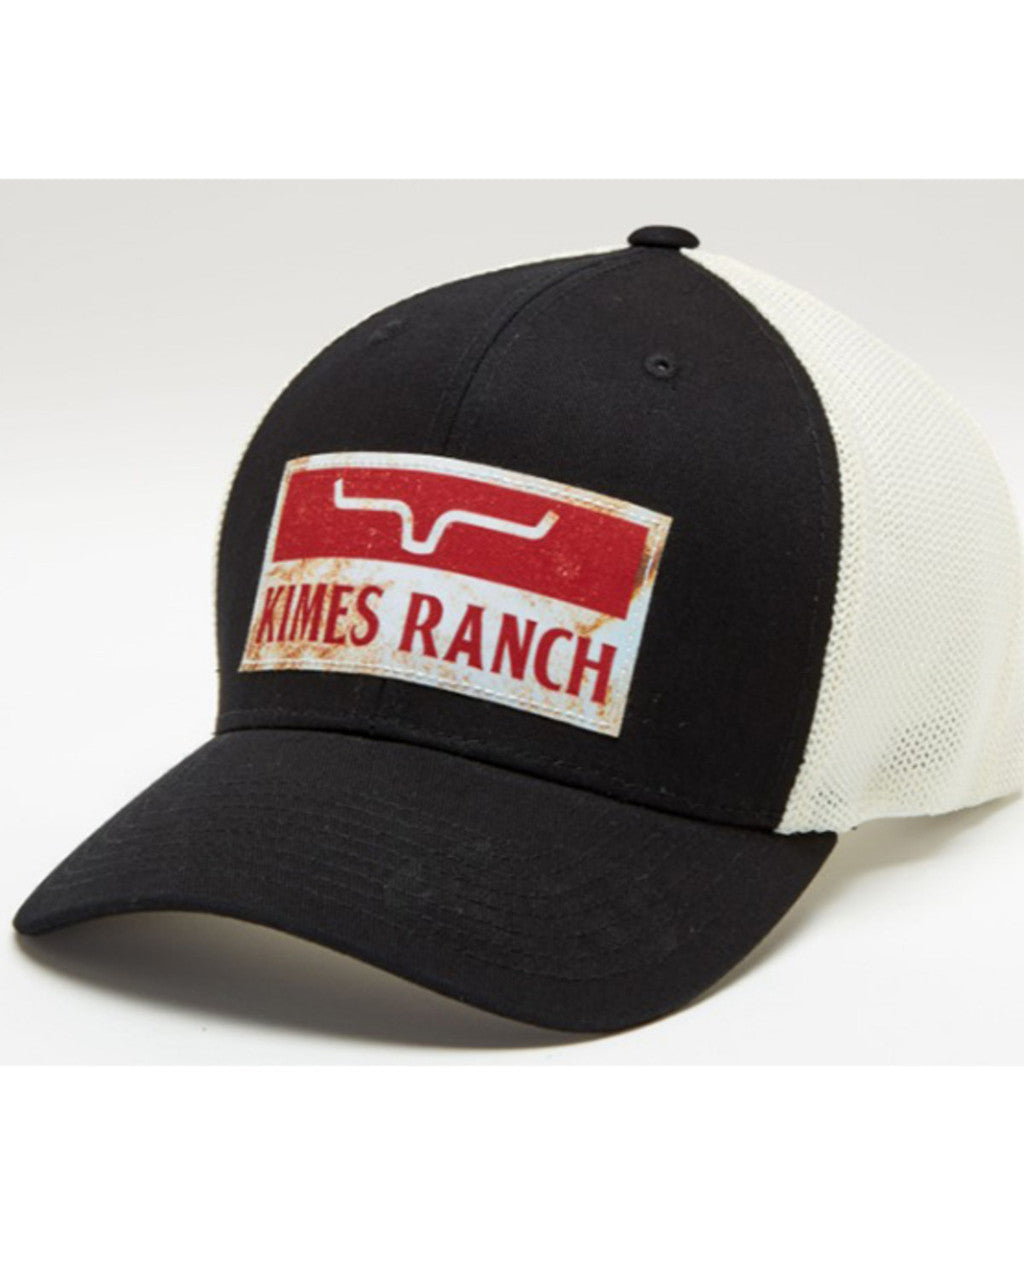 Kimes Ranch 110 Fire Ex Black Trucker Hat Cap